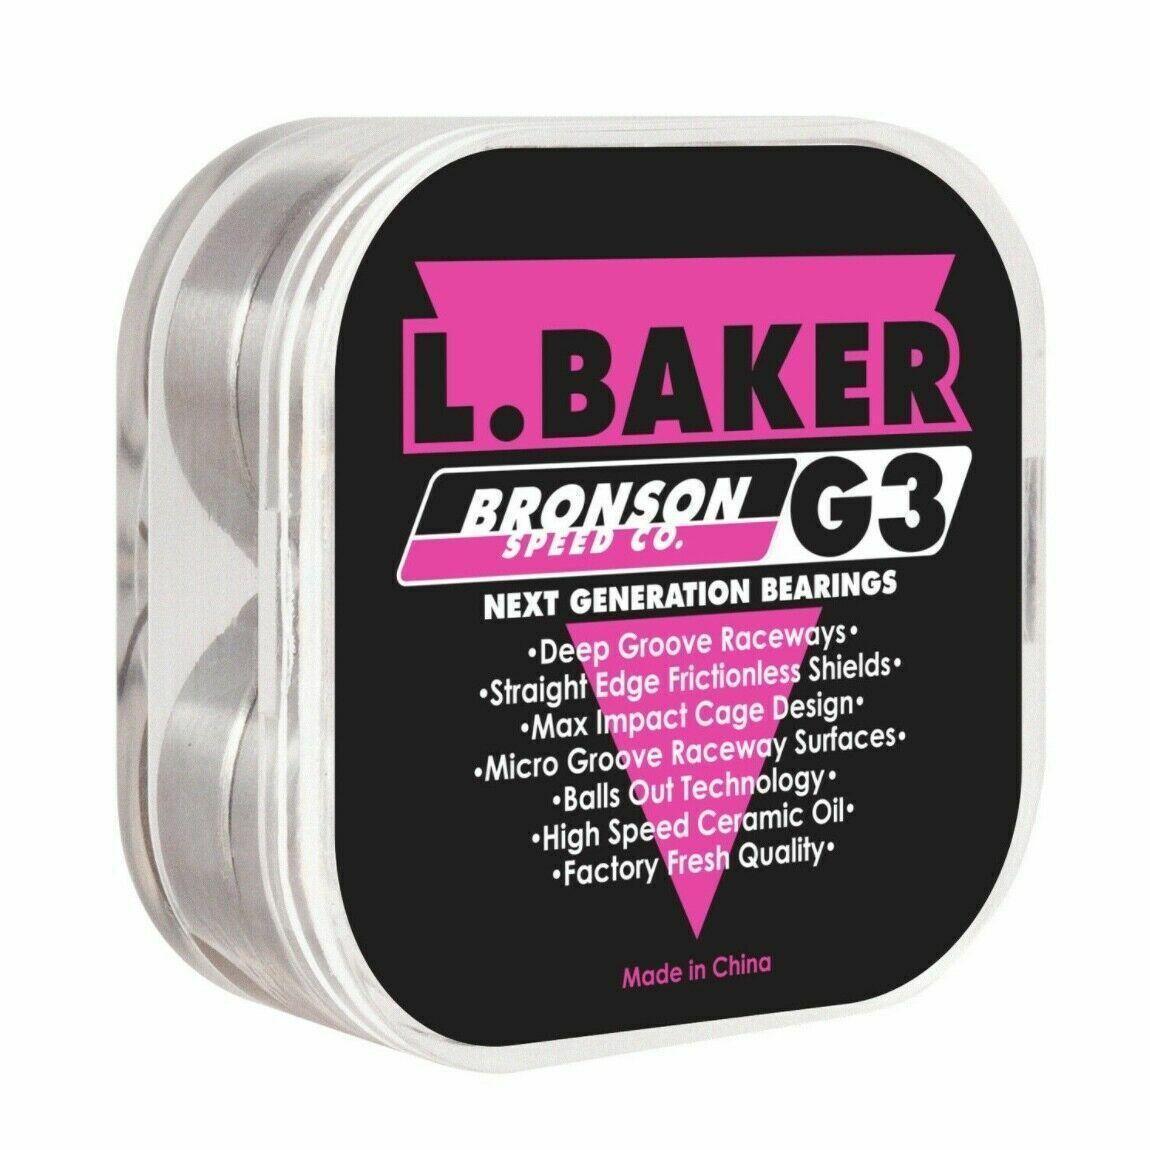 8x Bronson Speed Co Bearings G3 L.Baker PRO Next Gen Skateboard Bearings set of8 - Australian Empire Shop